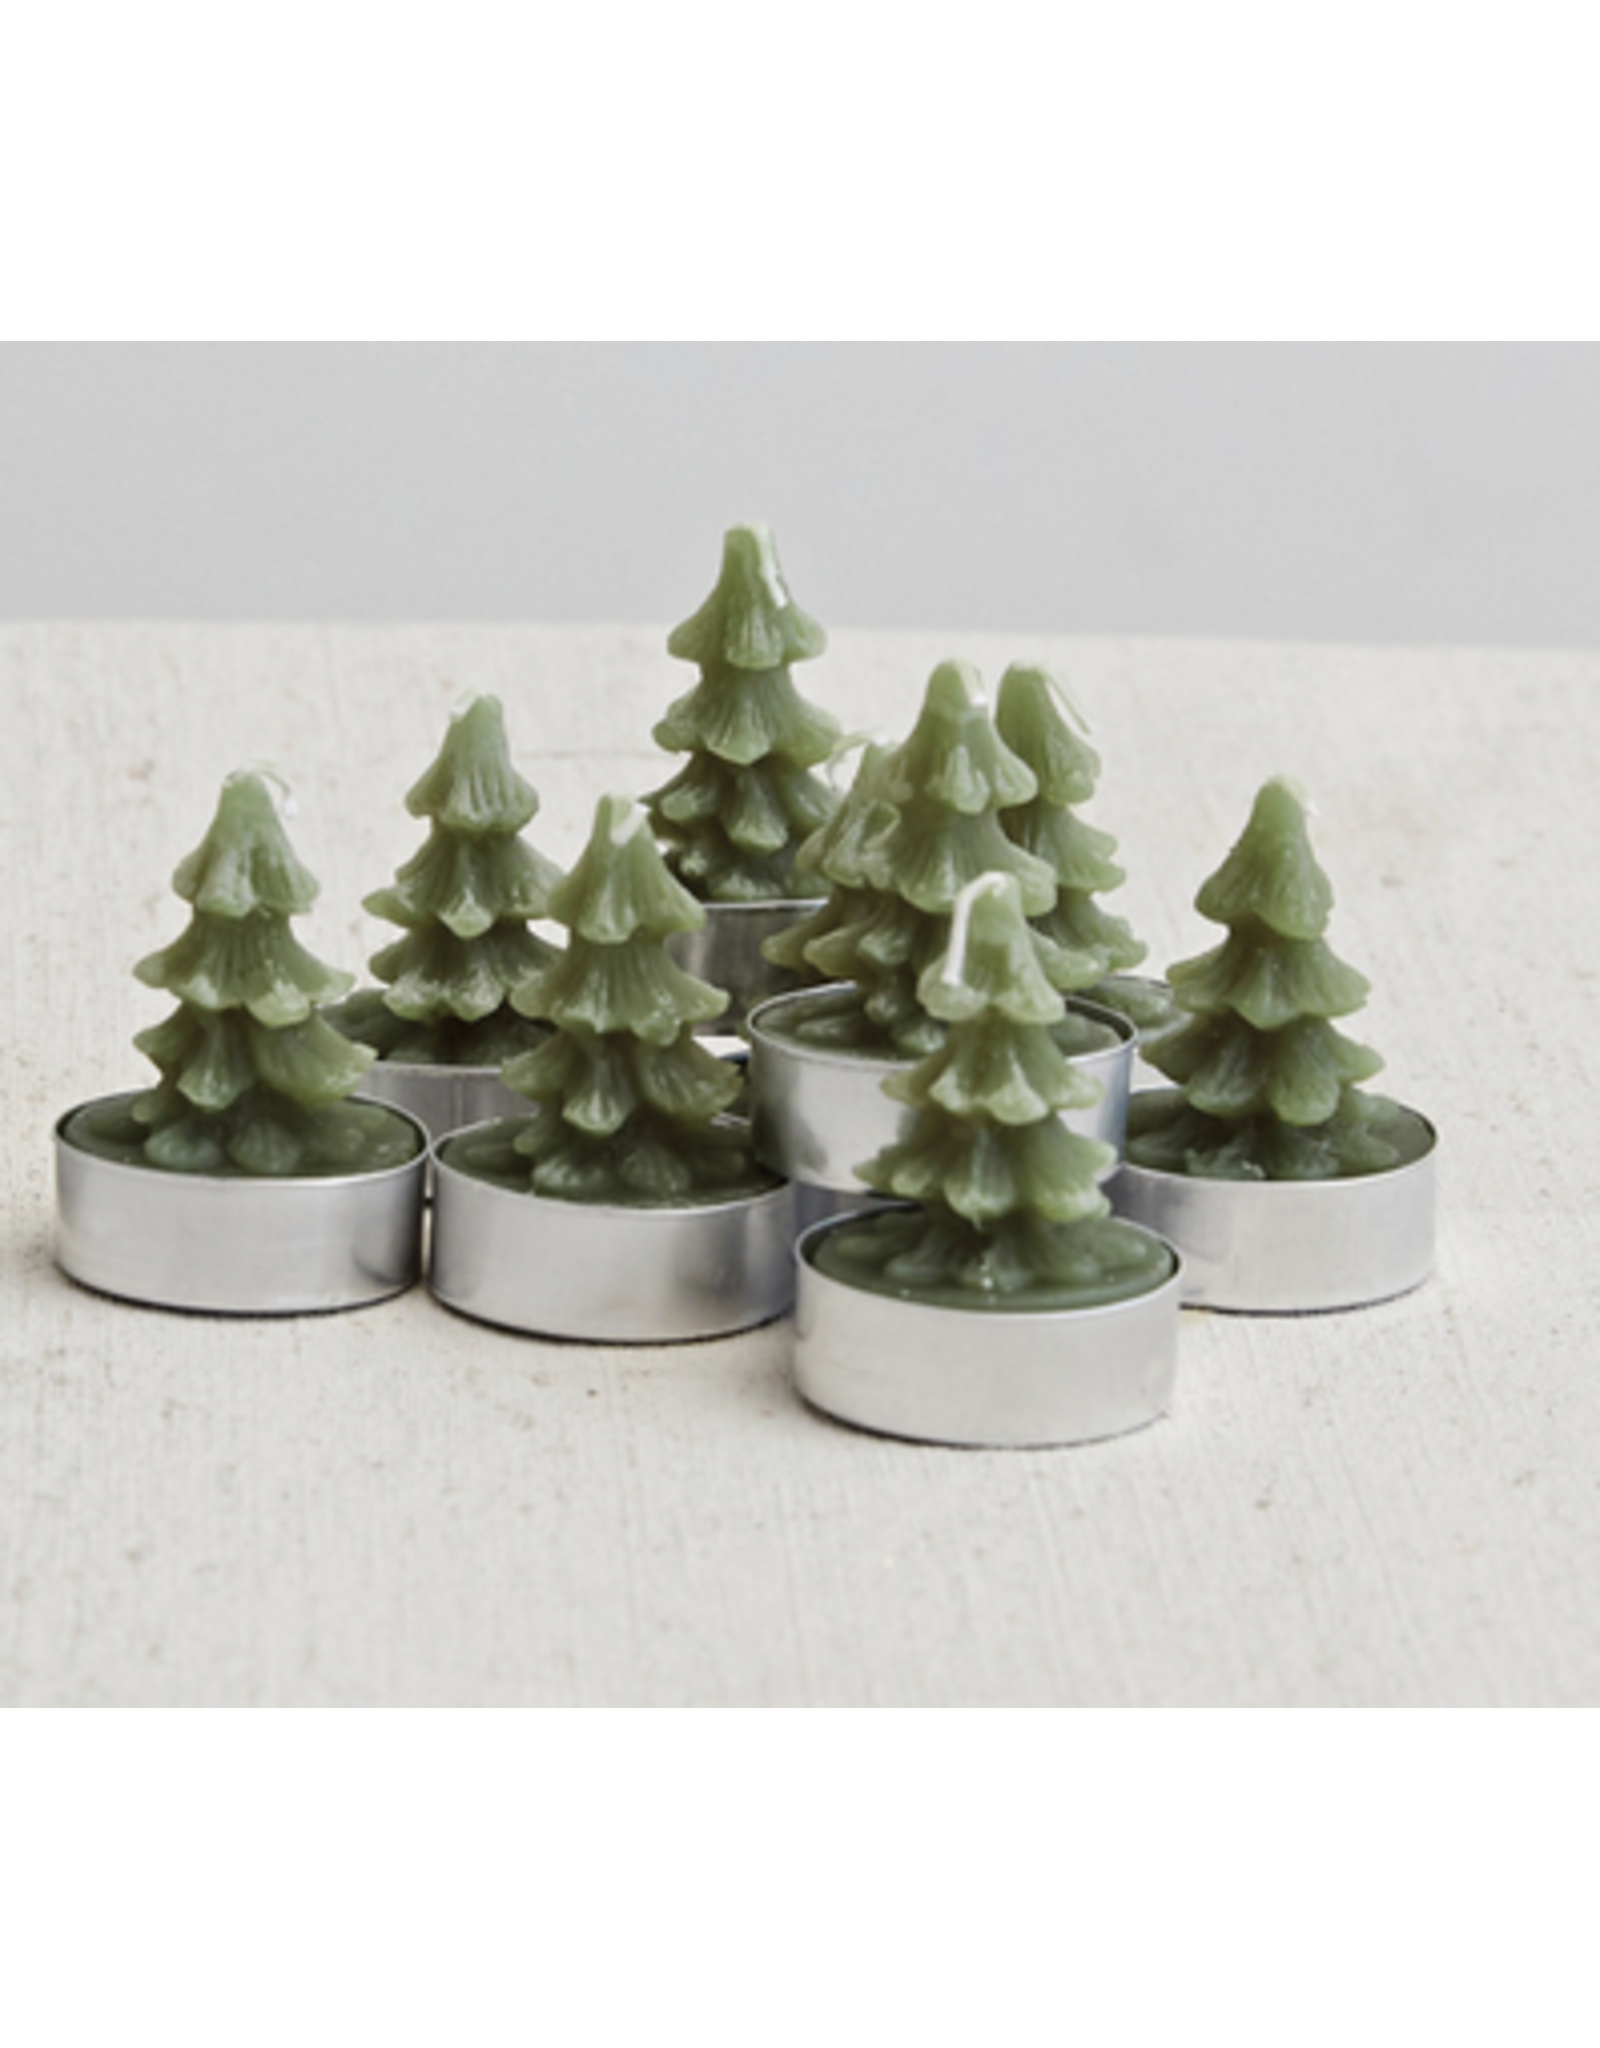 Creative Co-Op Unscented Christmas Tree Tea Lights, set of 9